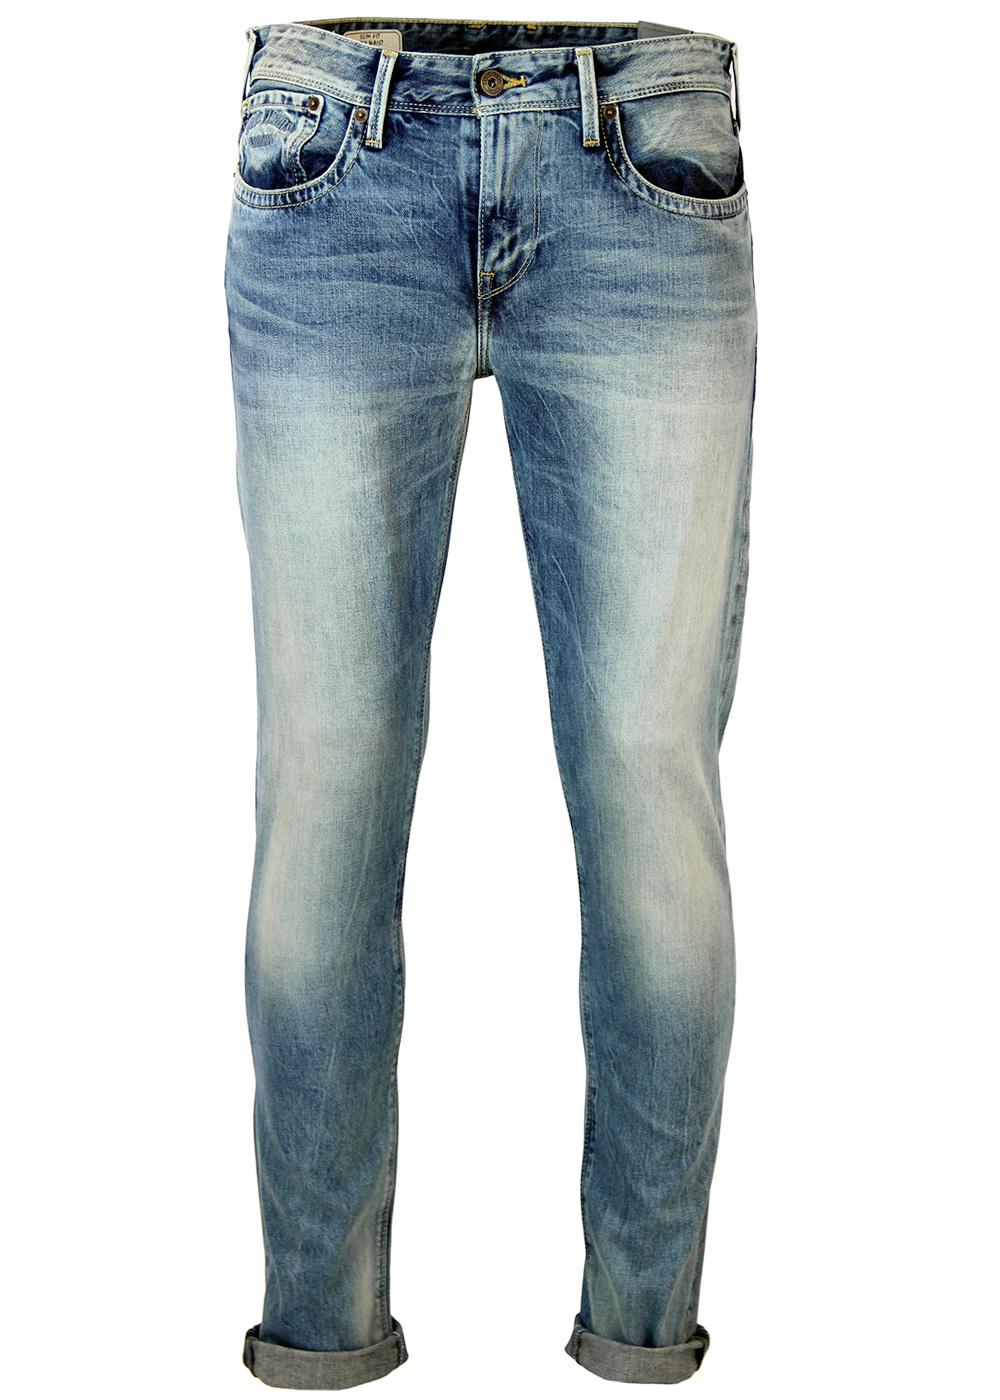 Hatch PEPE JEANS Retro Mod Slim Fit Jeans 